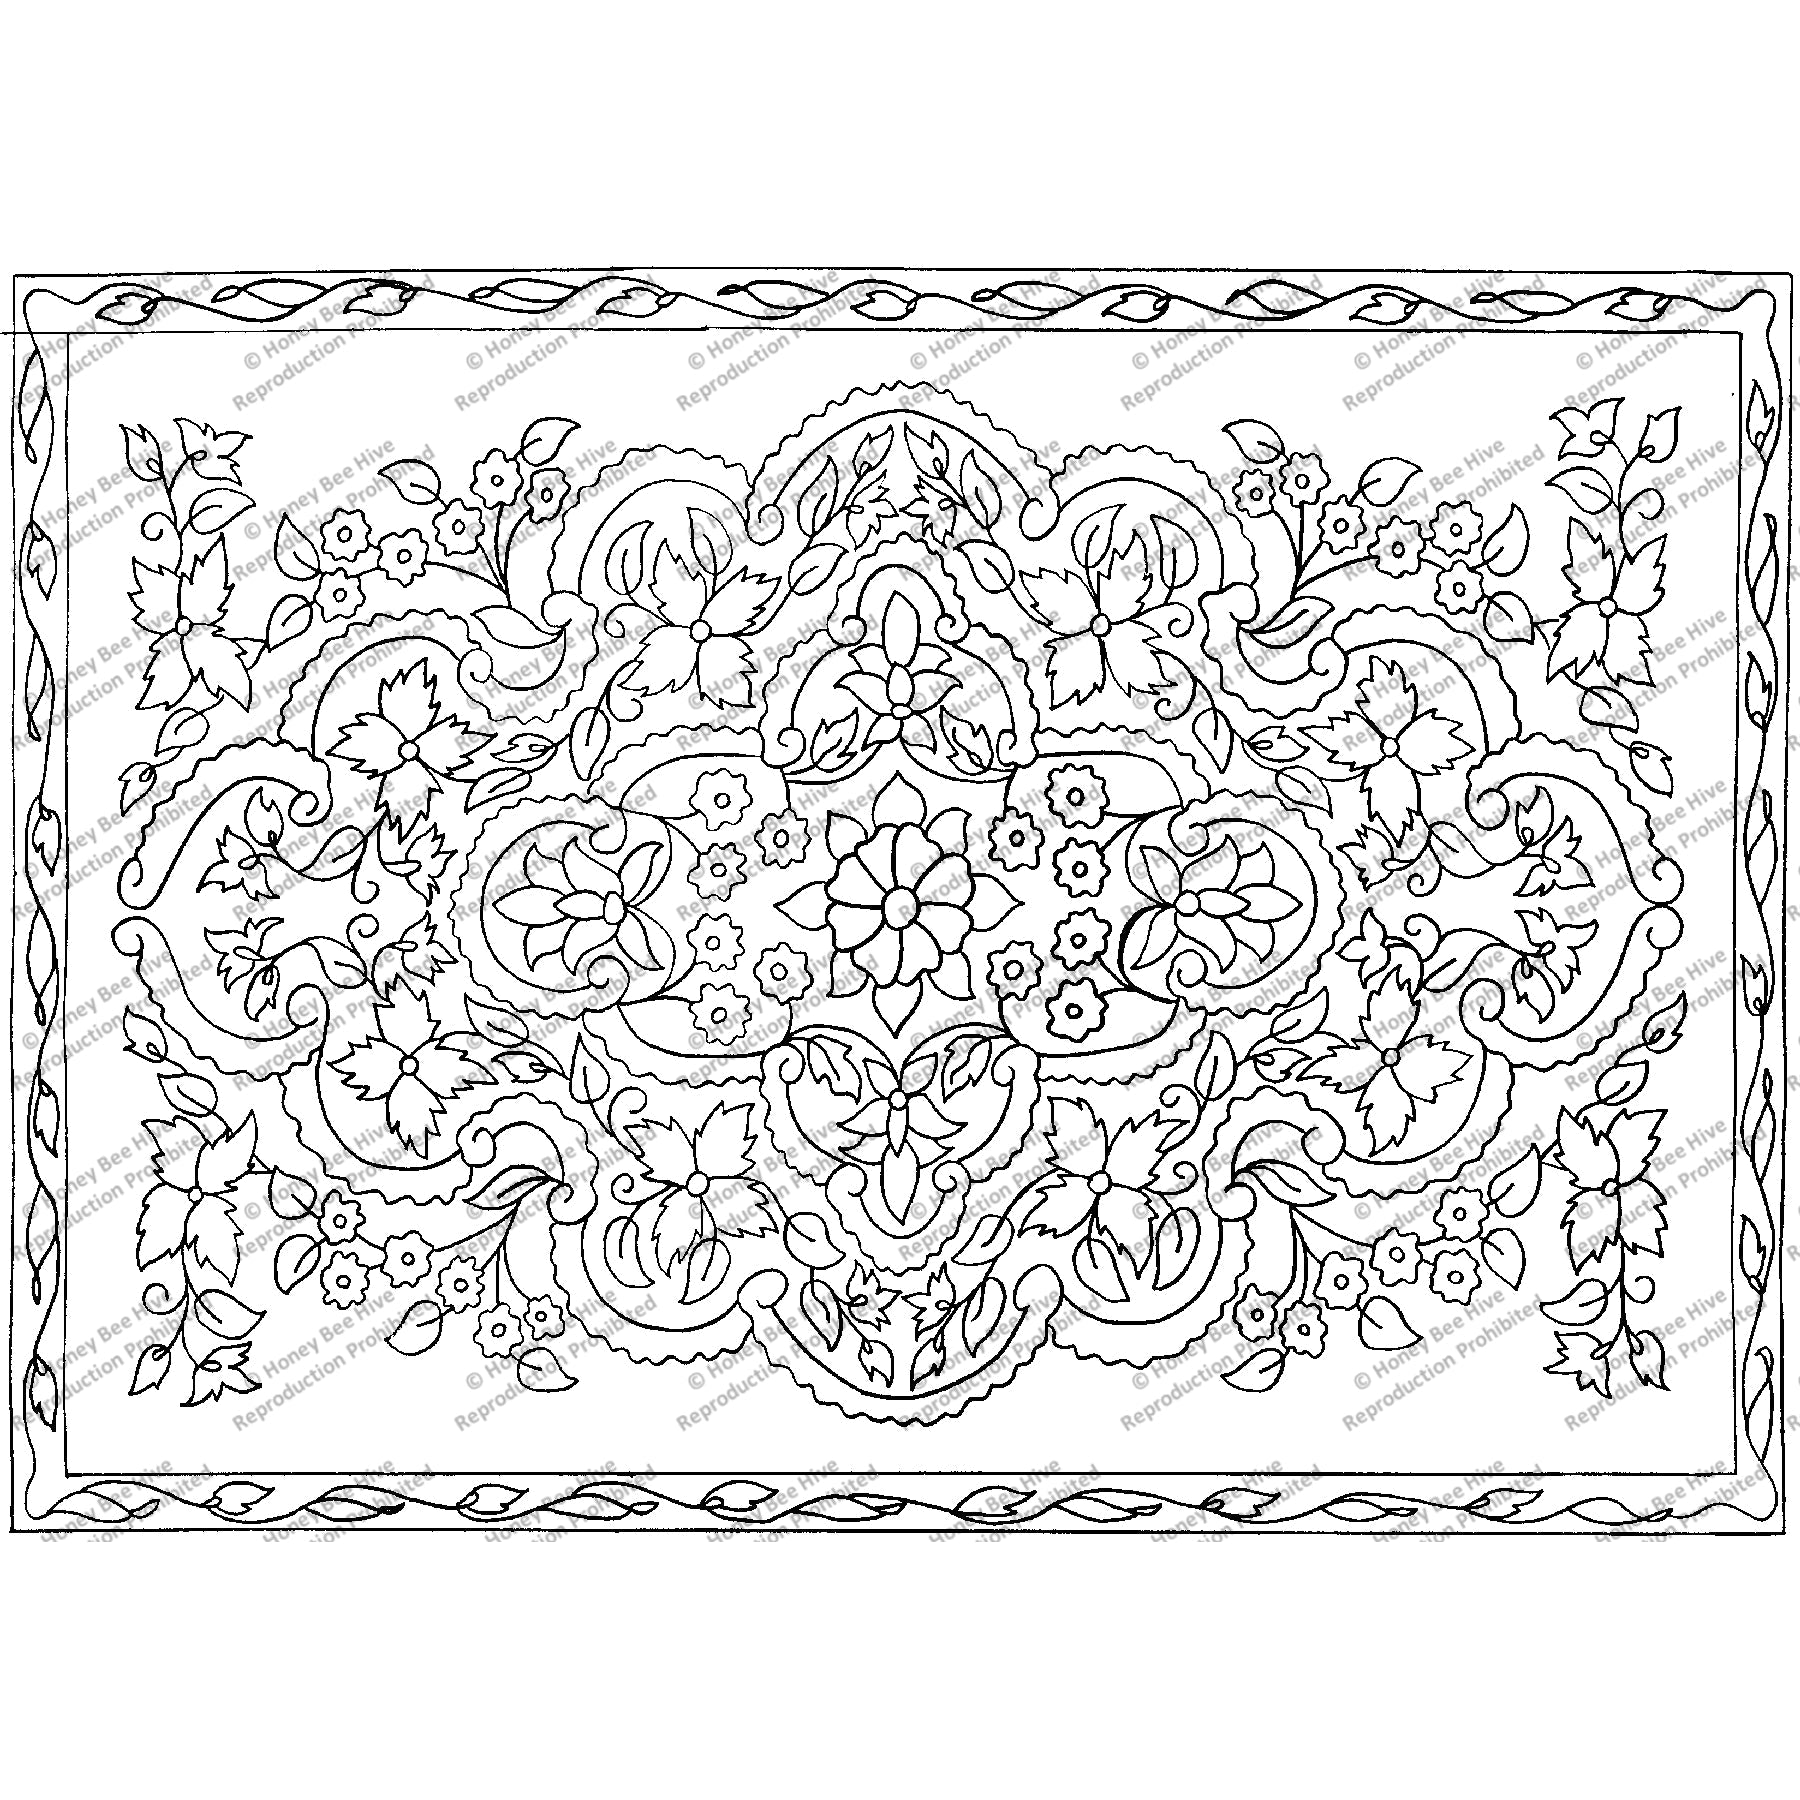 Ali-Riza - Small Center, rug hooking pattern